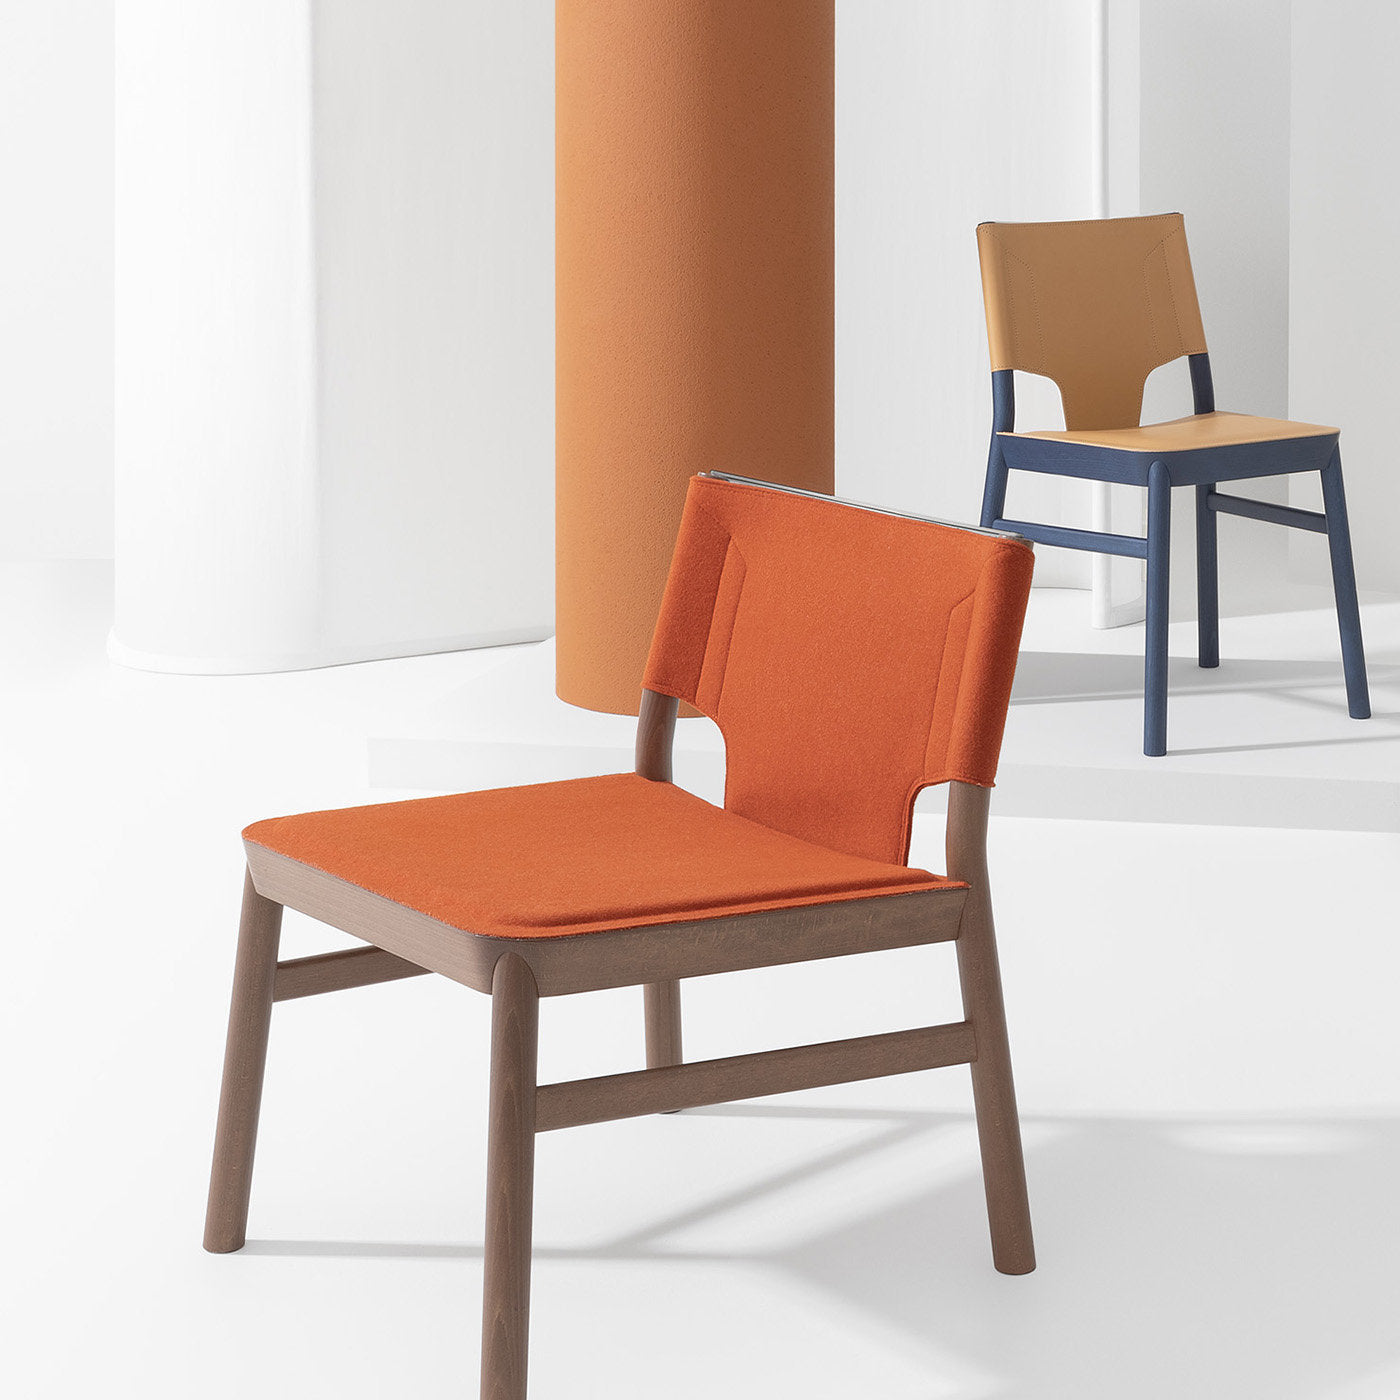 Marimba 114 Orange Lounge Chair by Emilio Nanni - Alternative view 1